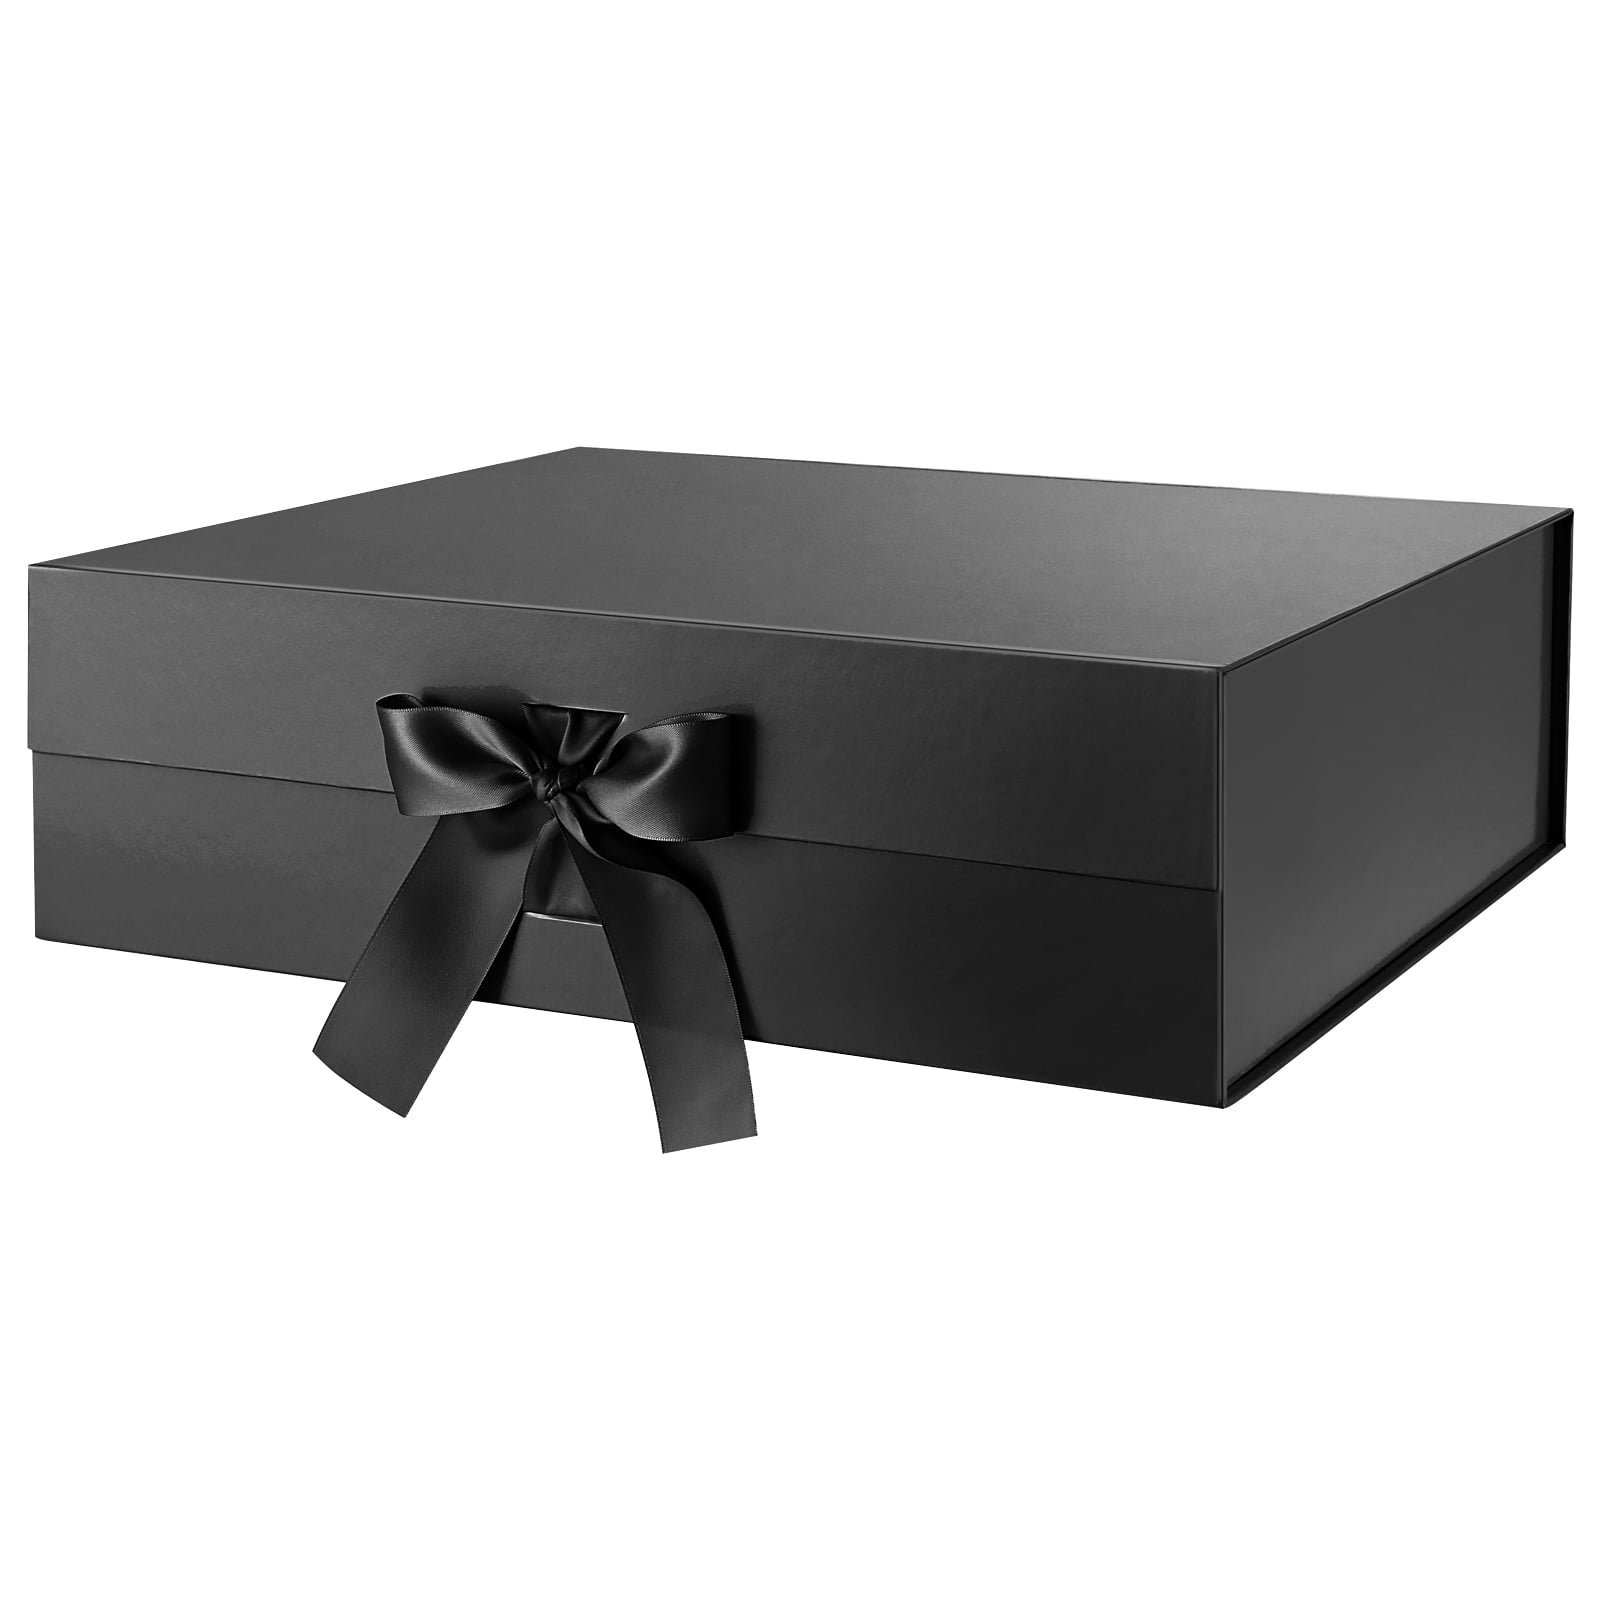 Black New Gift Box edition